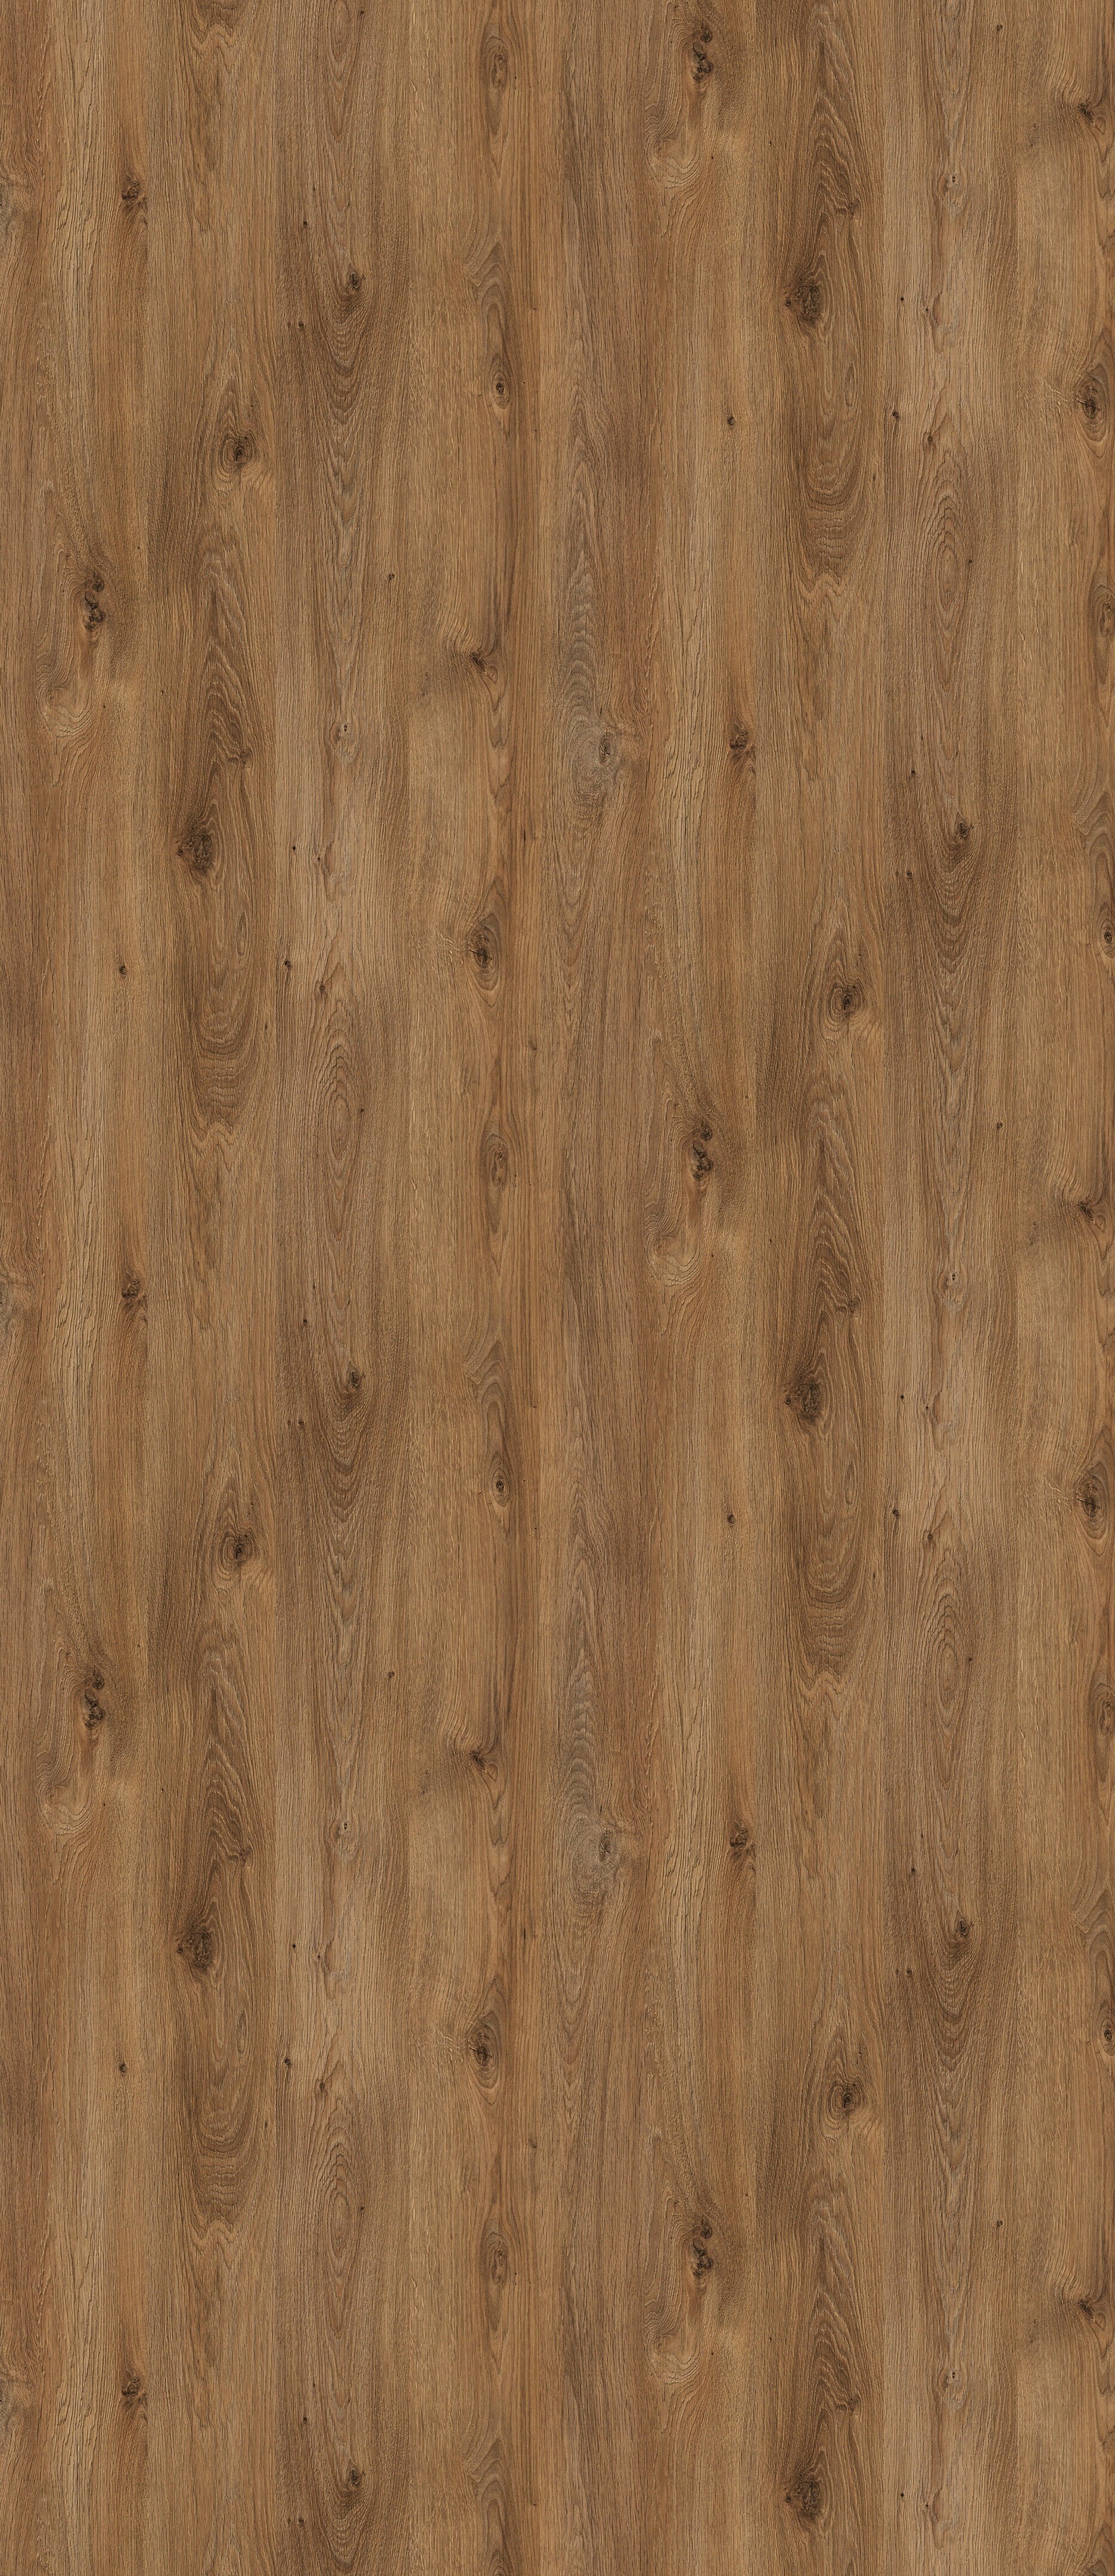 Wickes Wood Effect Laminate Edging - Pati Oak - 42 x 3000mm